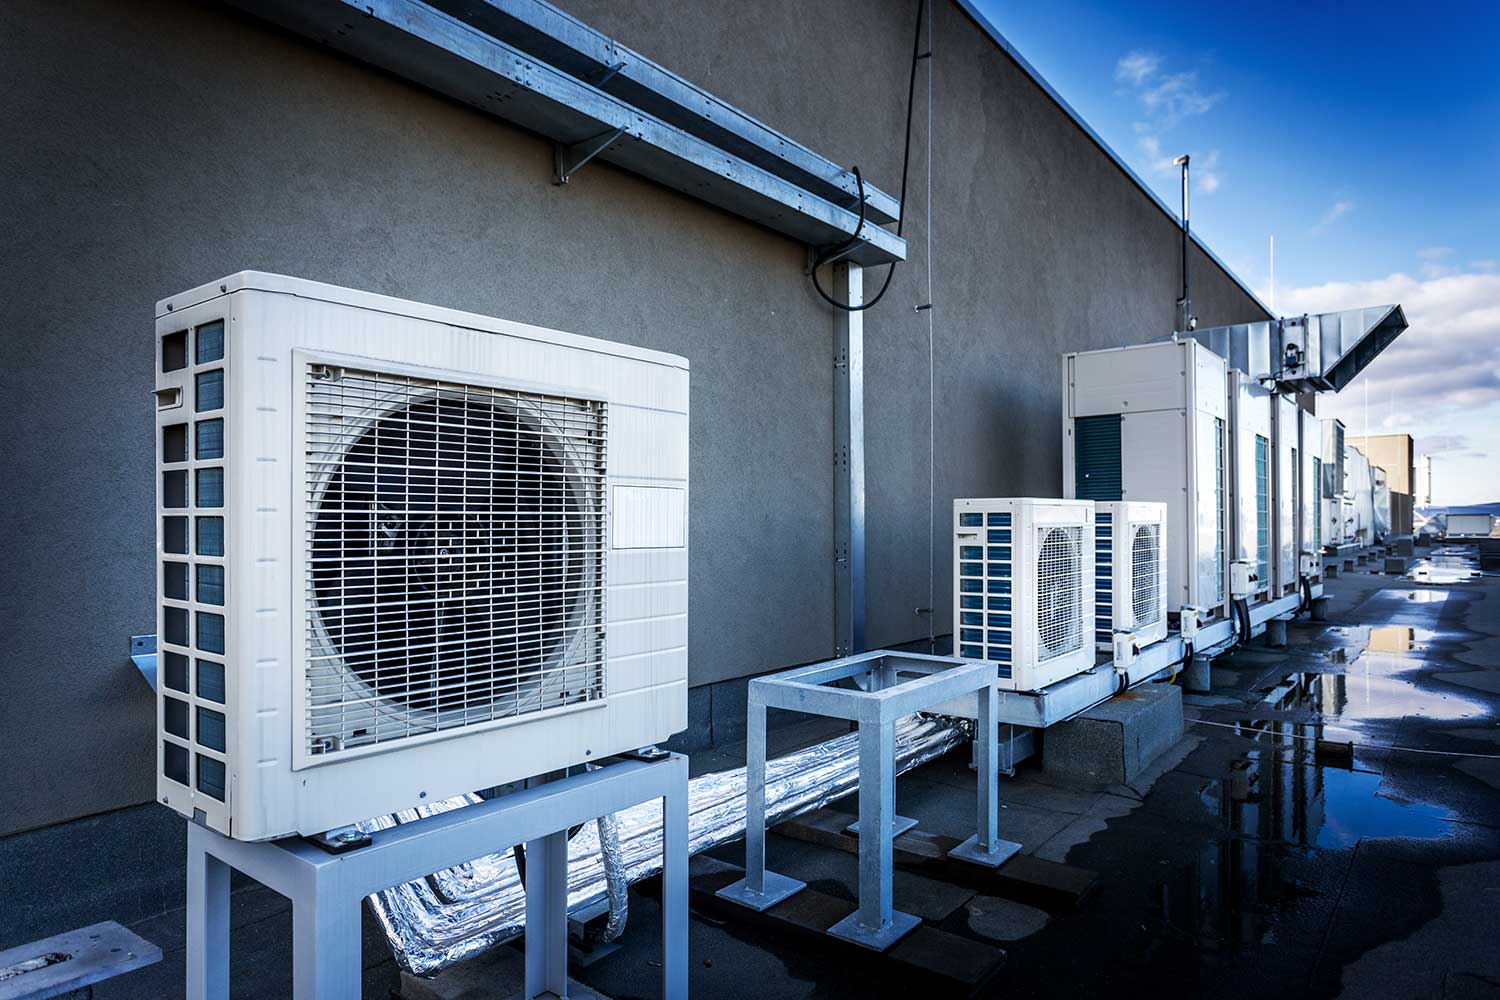 Heating installation companies are plentiful in Ashtabula